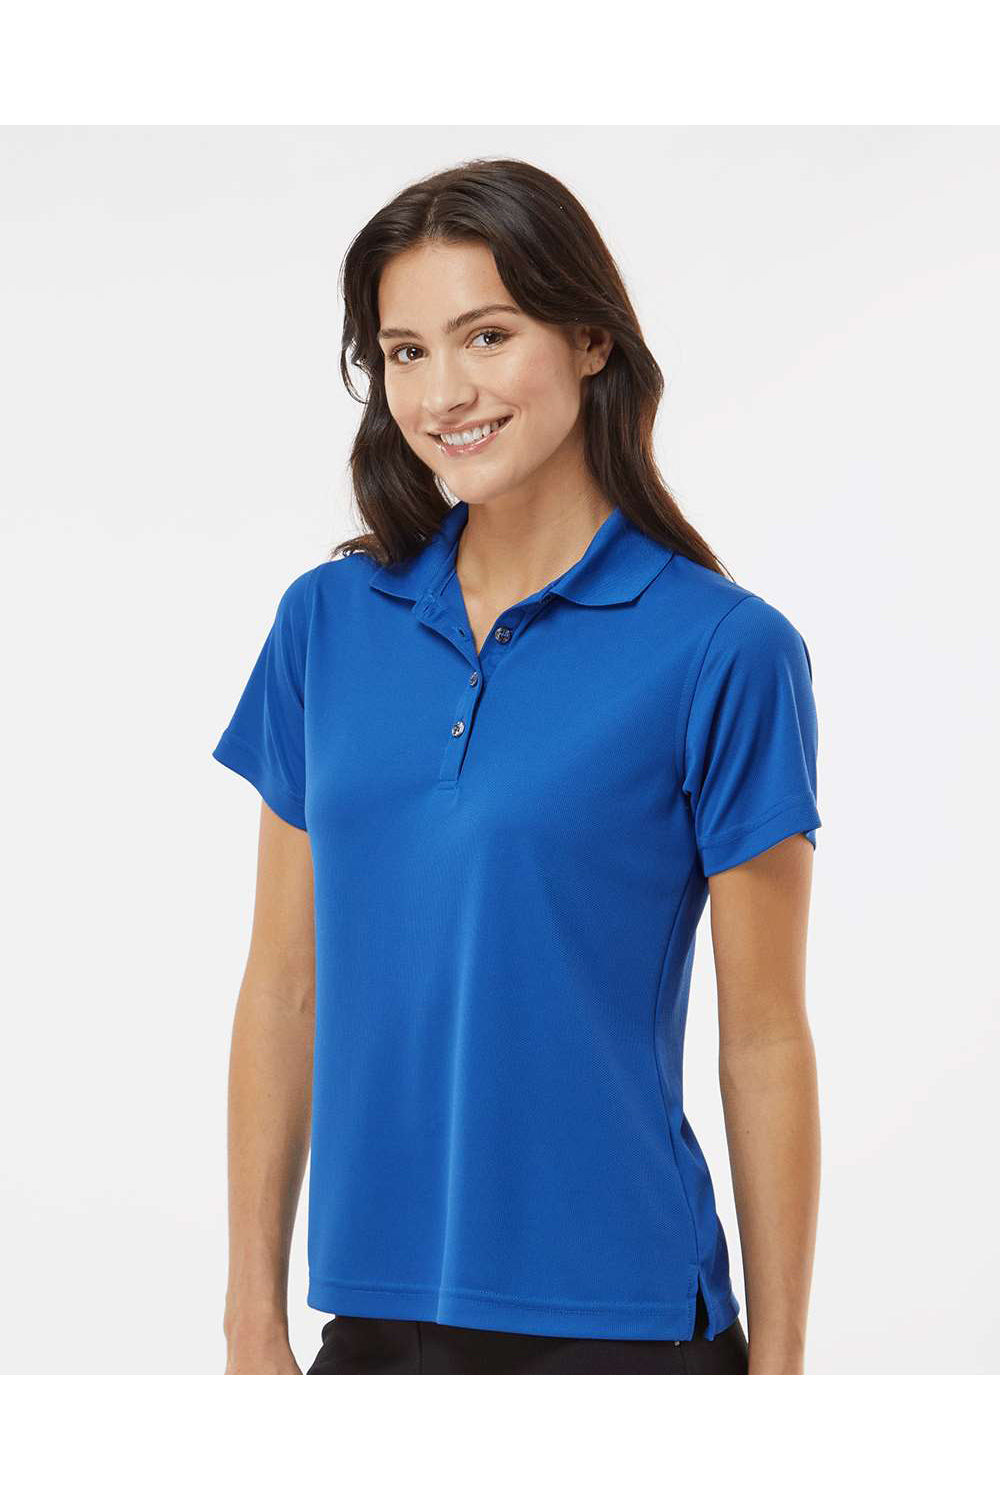 Paragon 104 Womens Saratoga Performance Mini Mesh Short Sleeve Polo Shirt Royal Blue Model Side